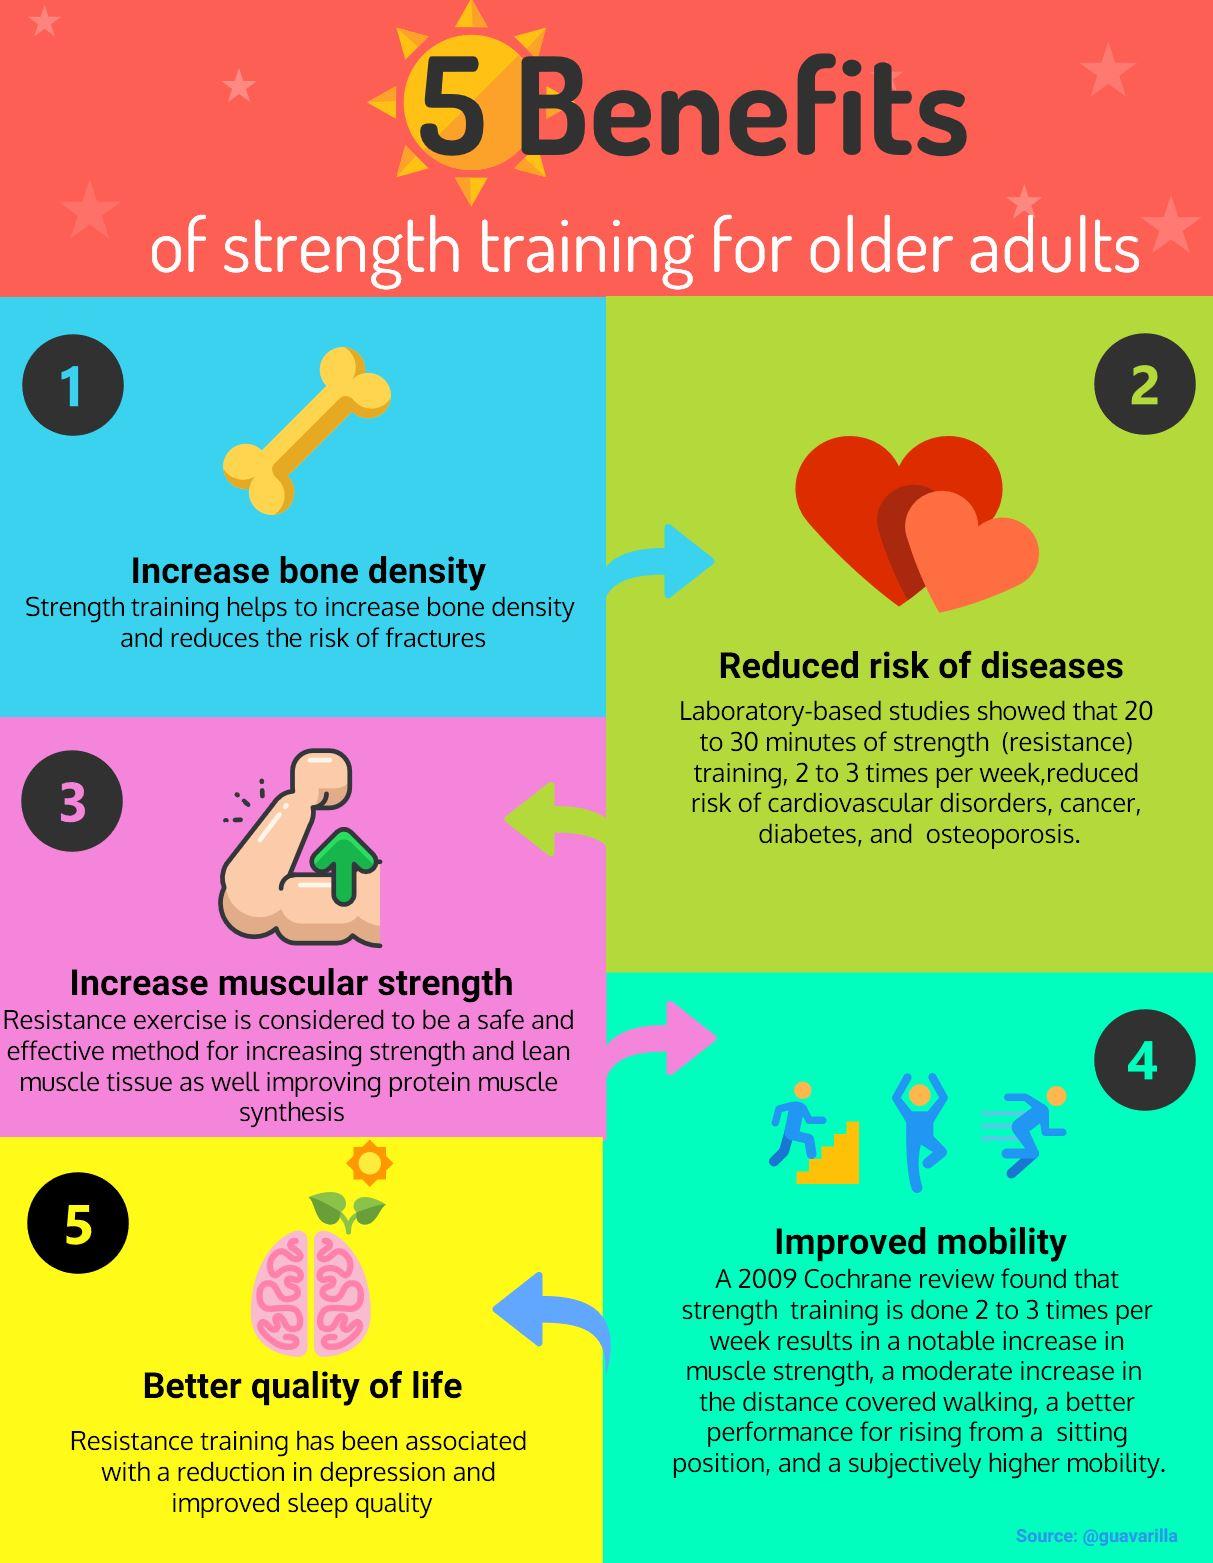 ZDROJ: http://thebestoftheinternets.blogspot.com/2018/08/infographic-5-benefits-of-strength.html